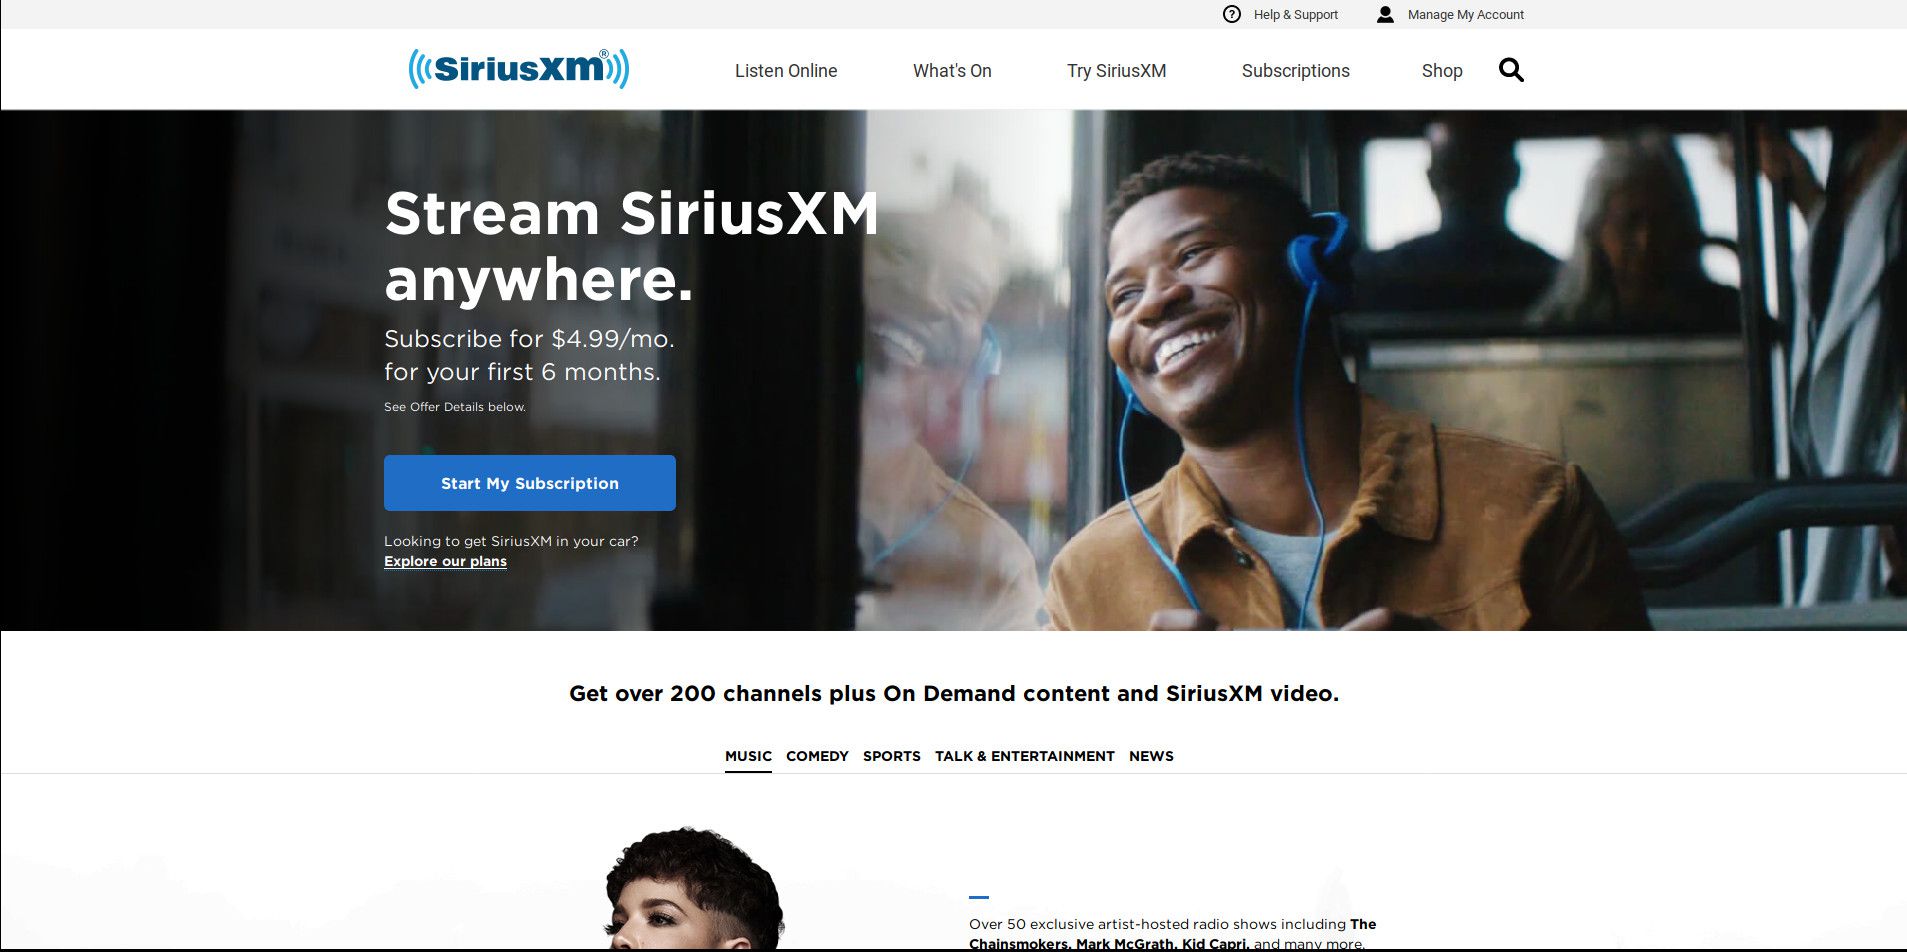 SiriusXM "Starta min prenumeration" -sida.